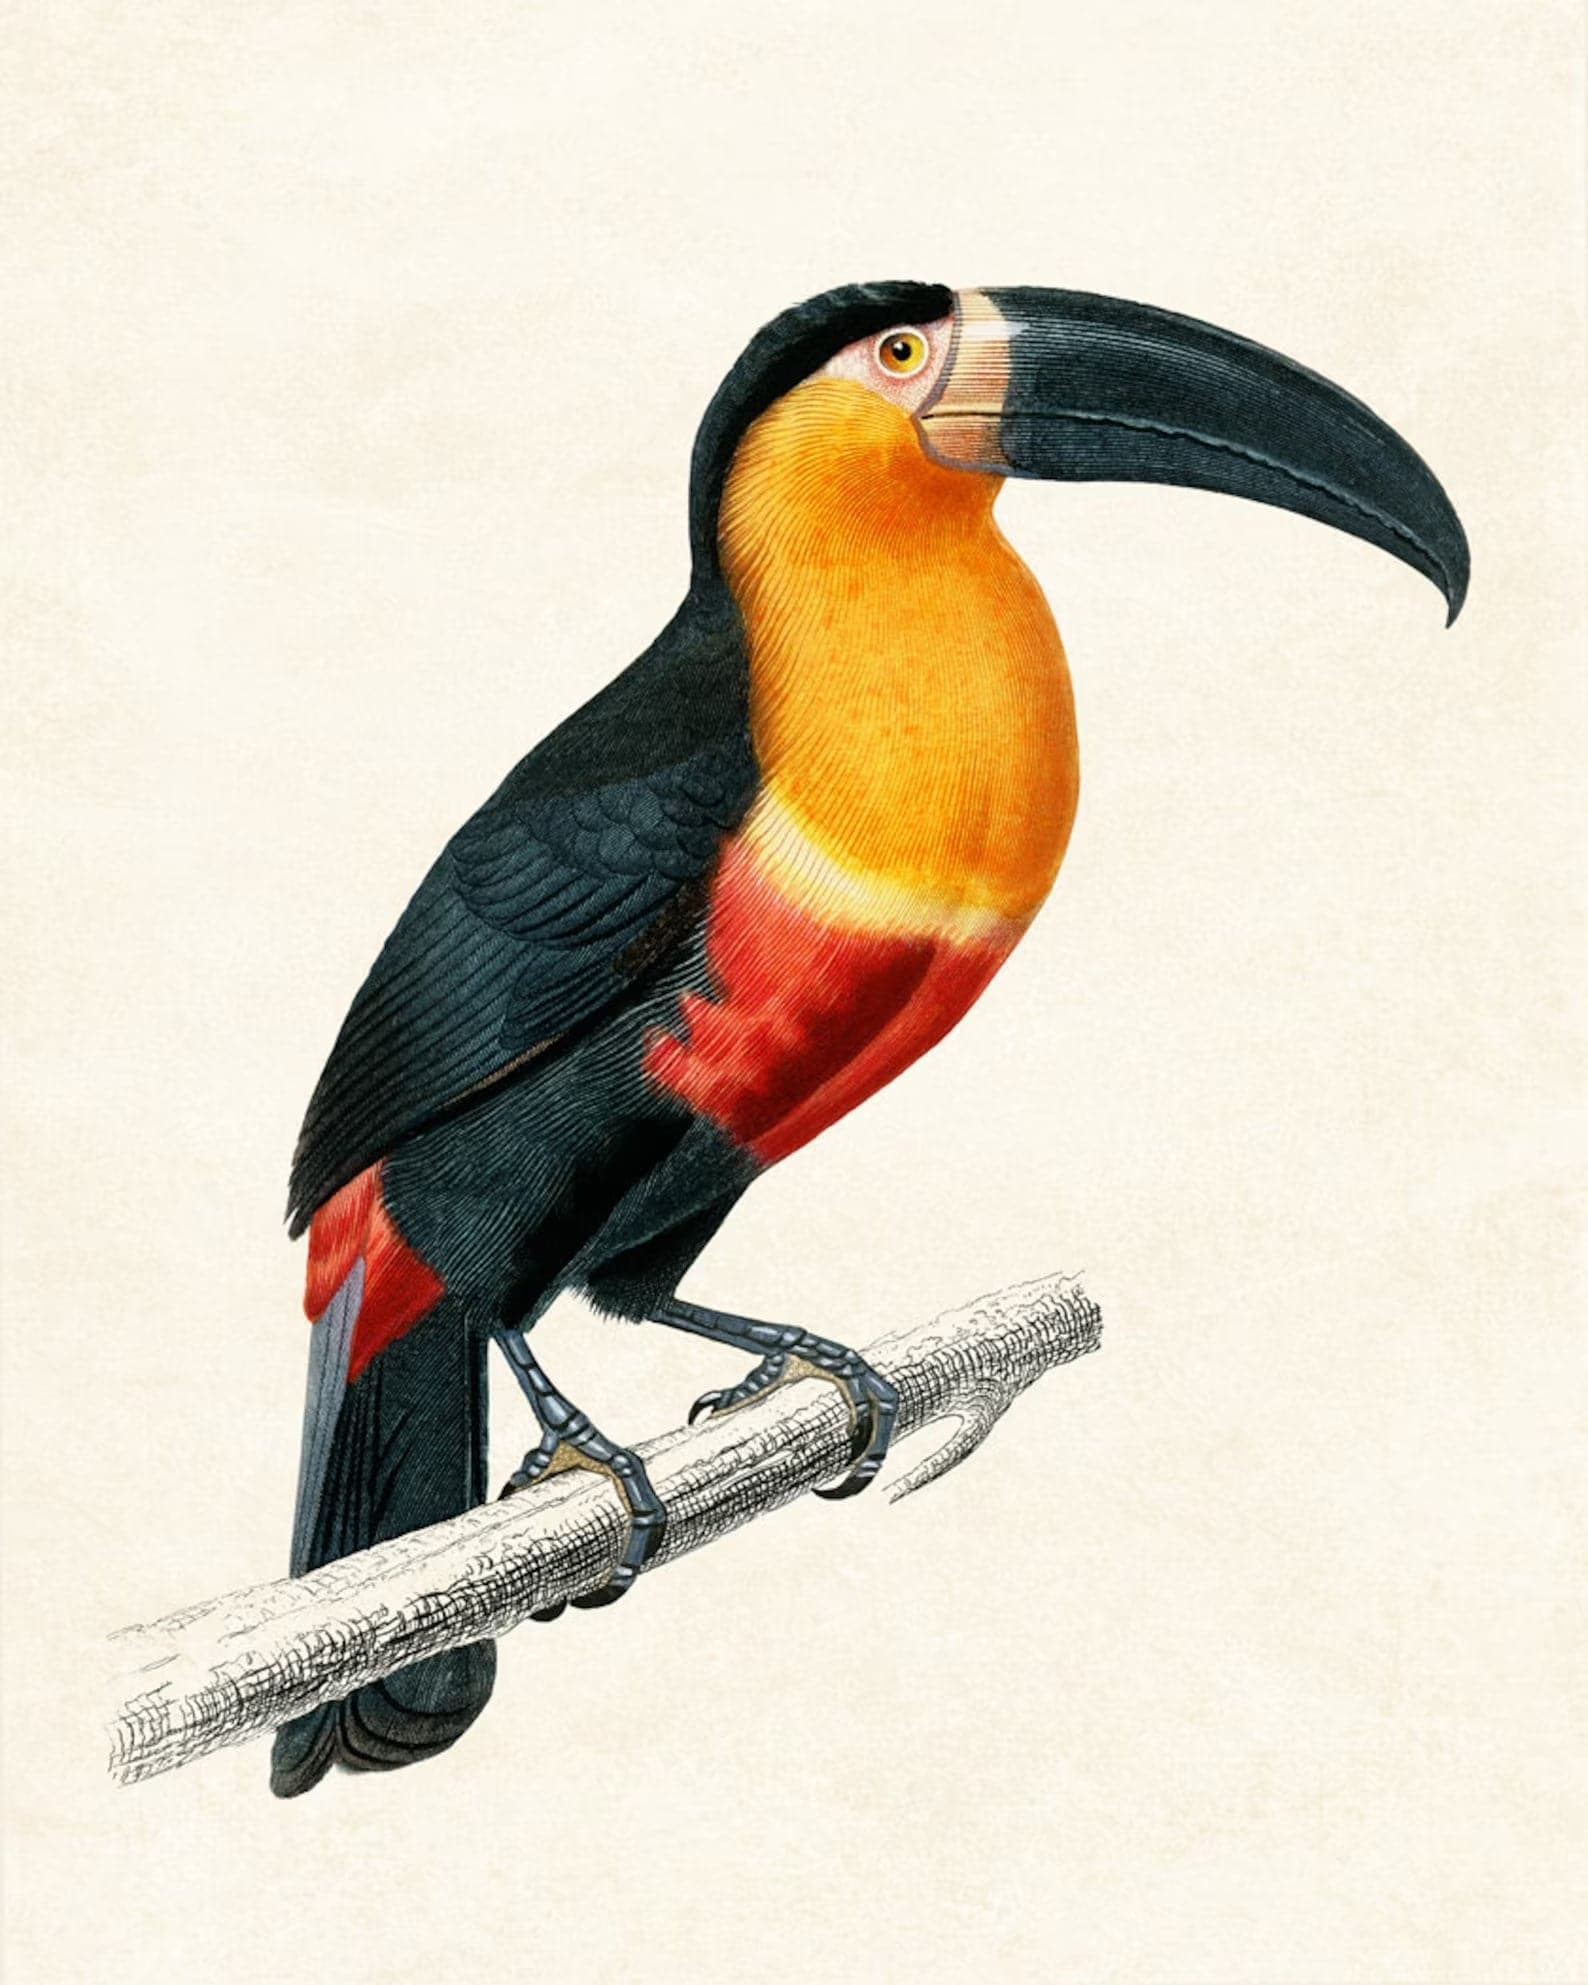 Framed 4 Panels - Steller's Jay, Military Macaw, Snowy Owl, Toucan